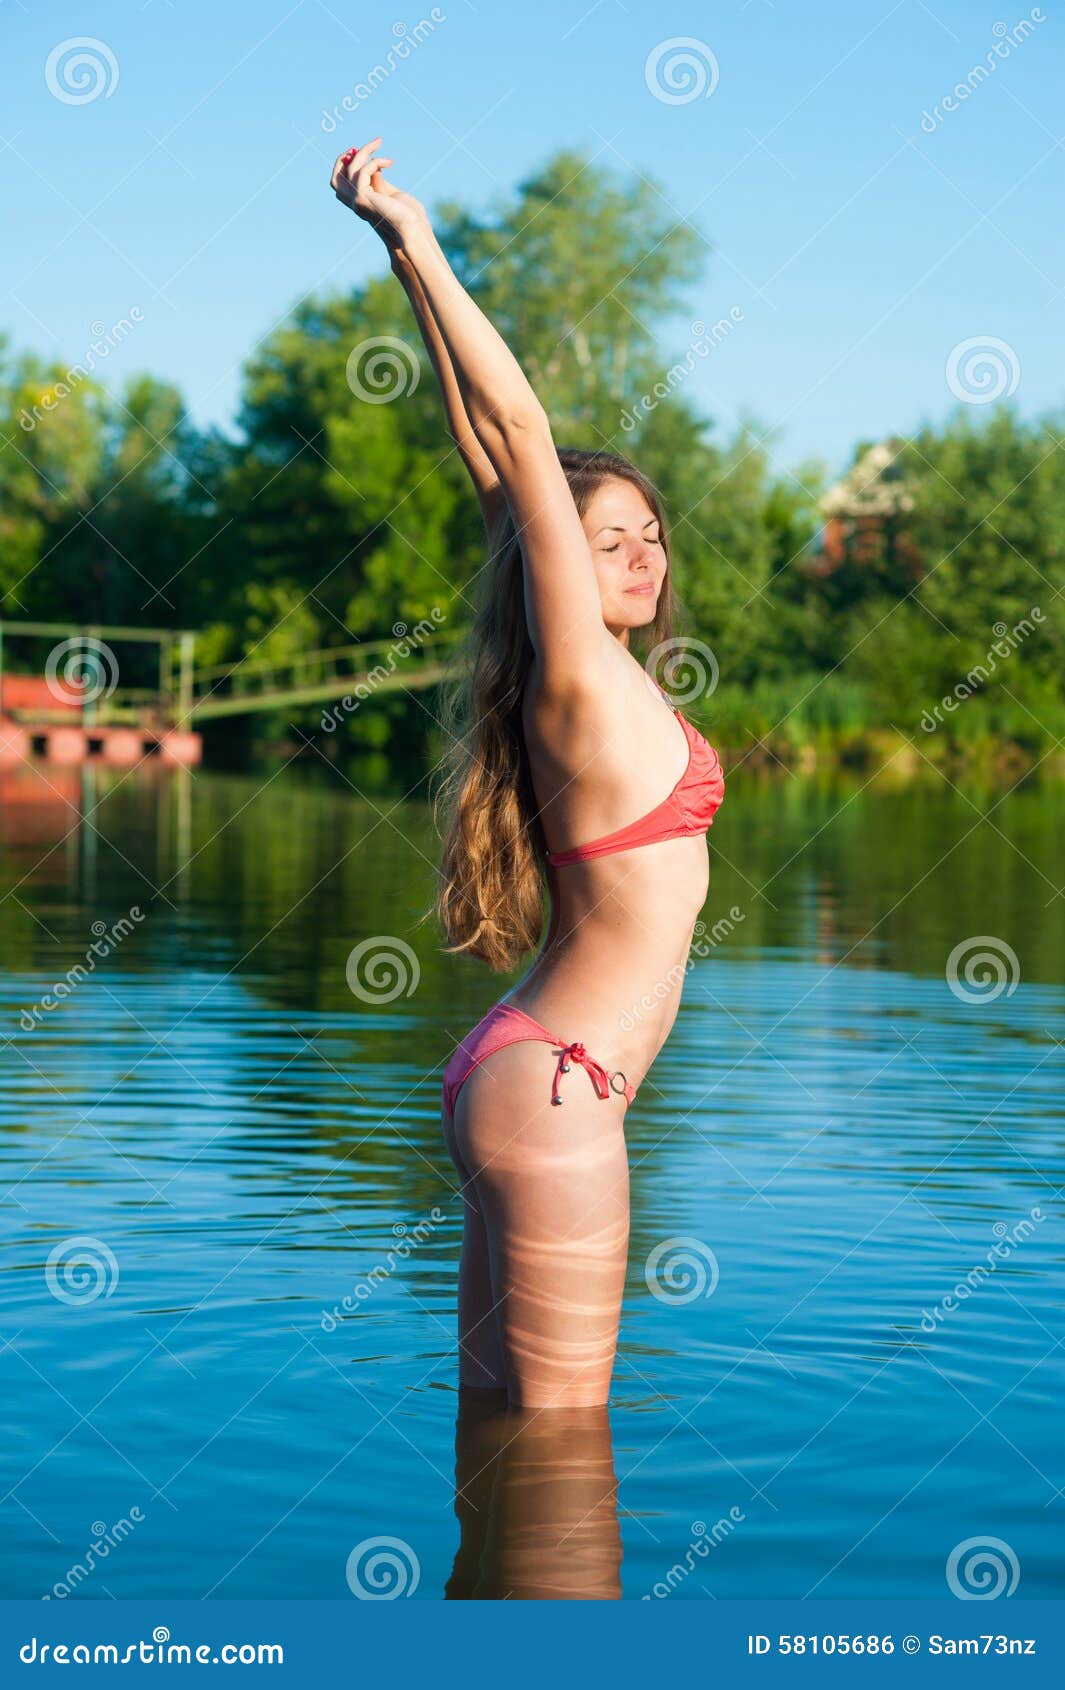 https://thumbs.dreamstime.com/z/stretching-girl-bikini-lake-beautiful-red-58105686.jpg